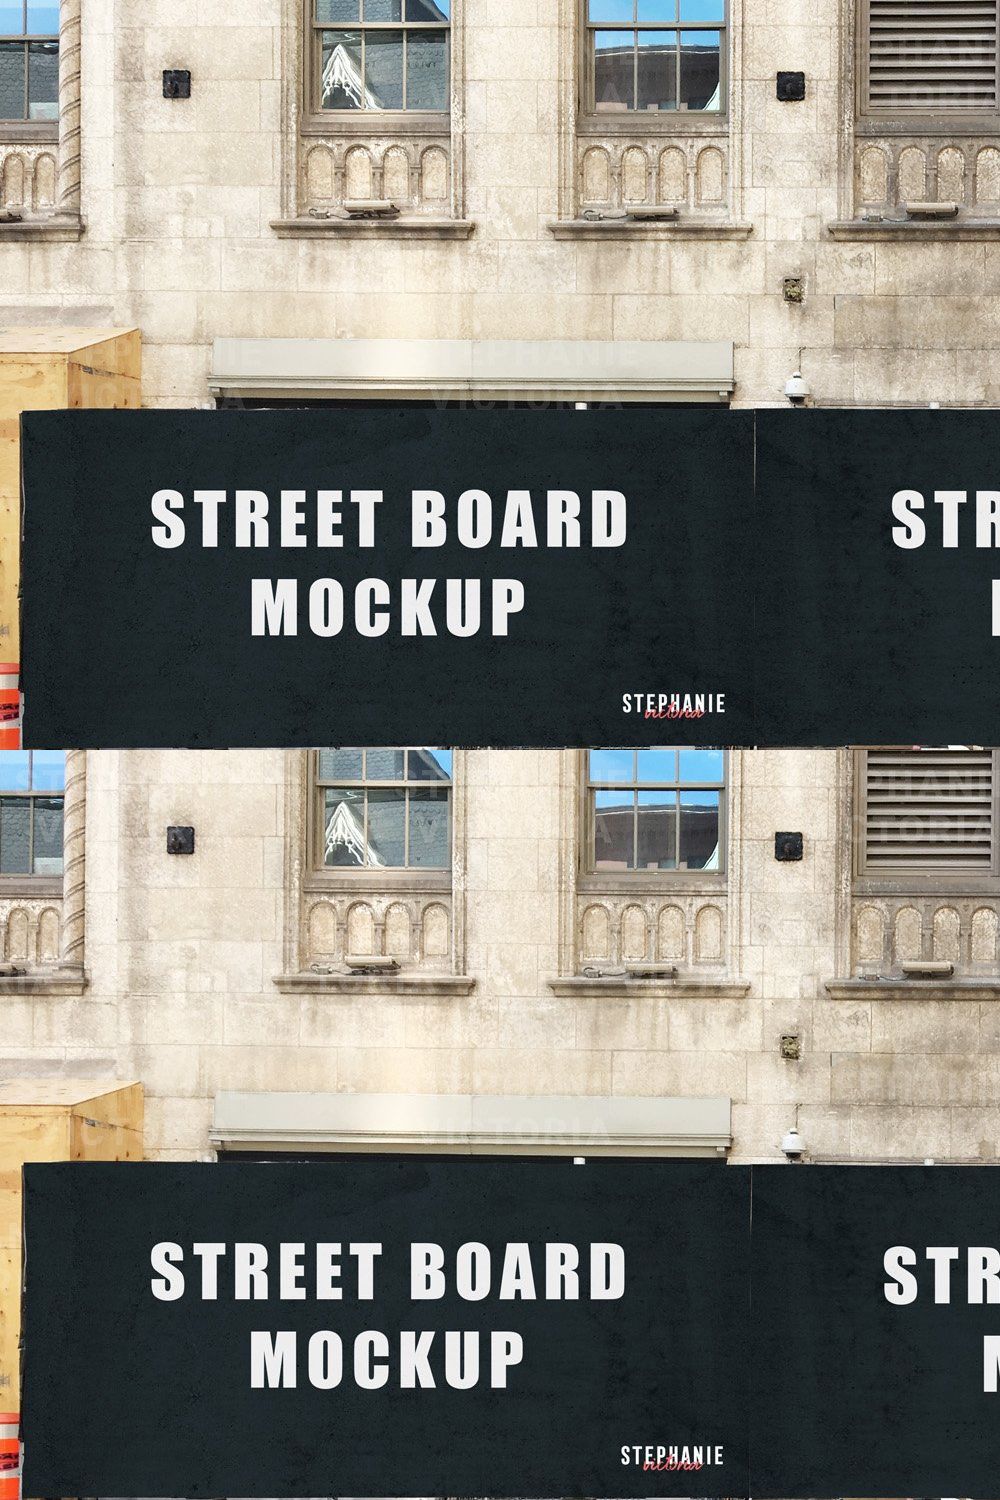 Street Boards Mockup pinterest preview image.